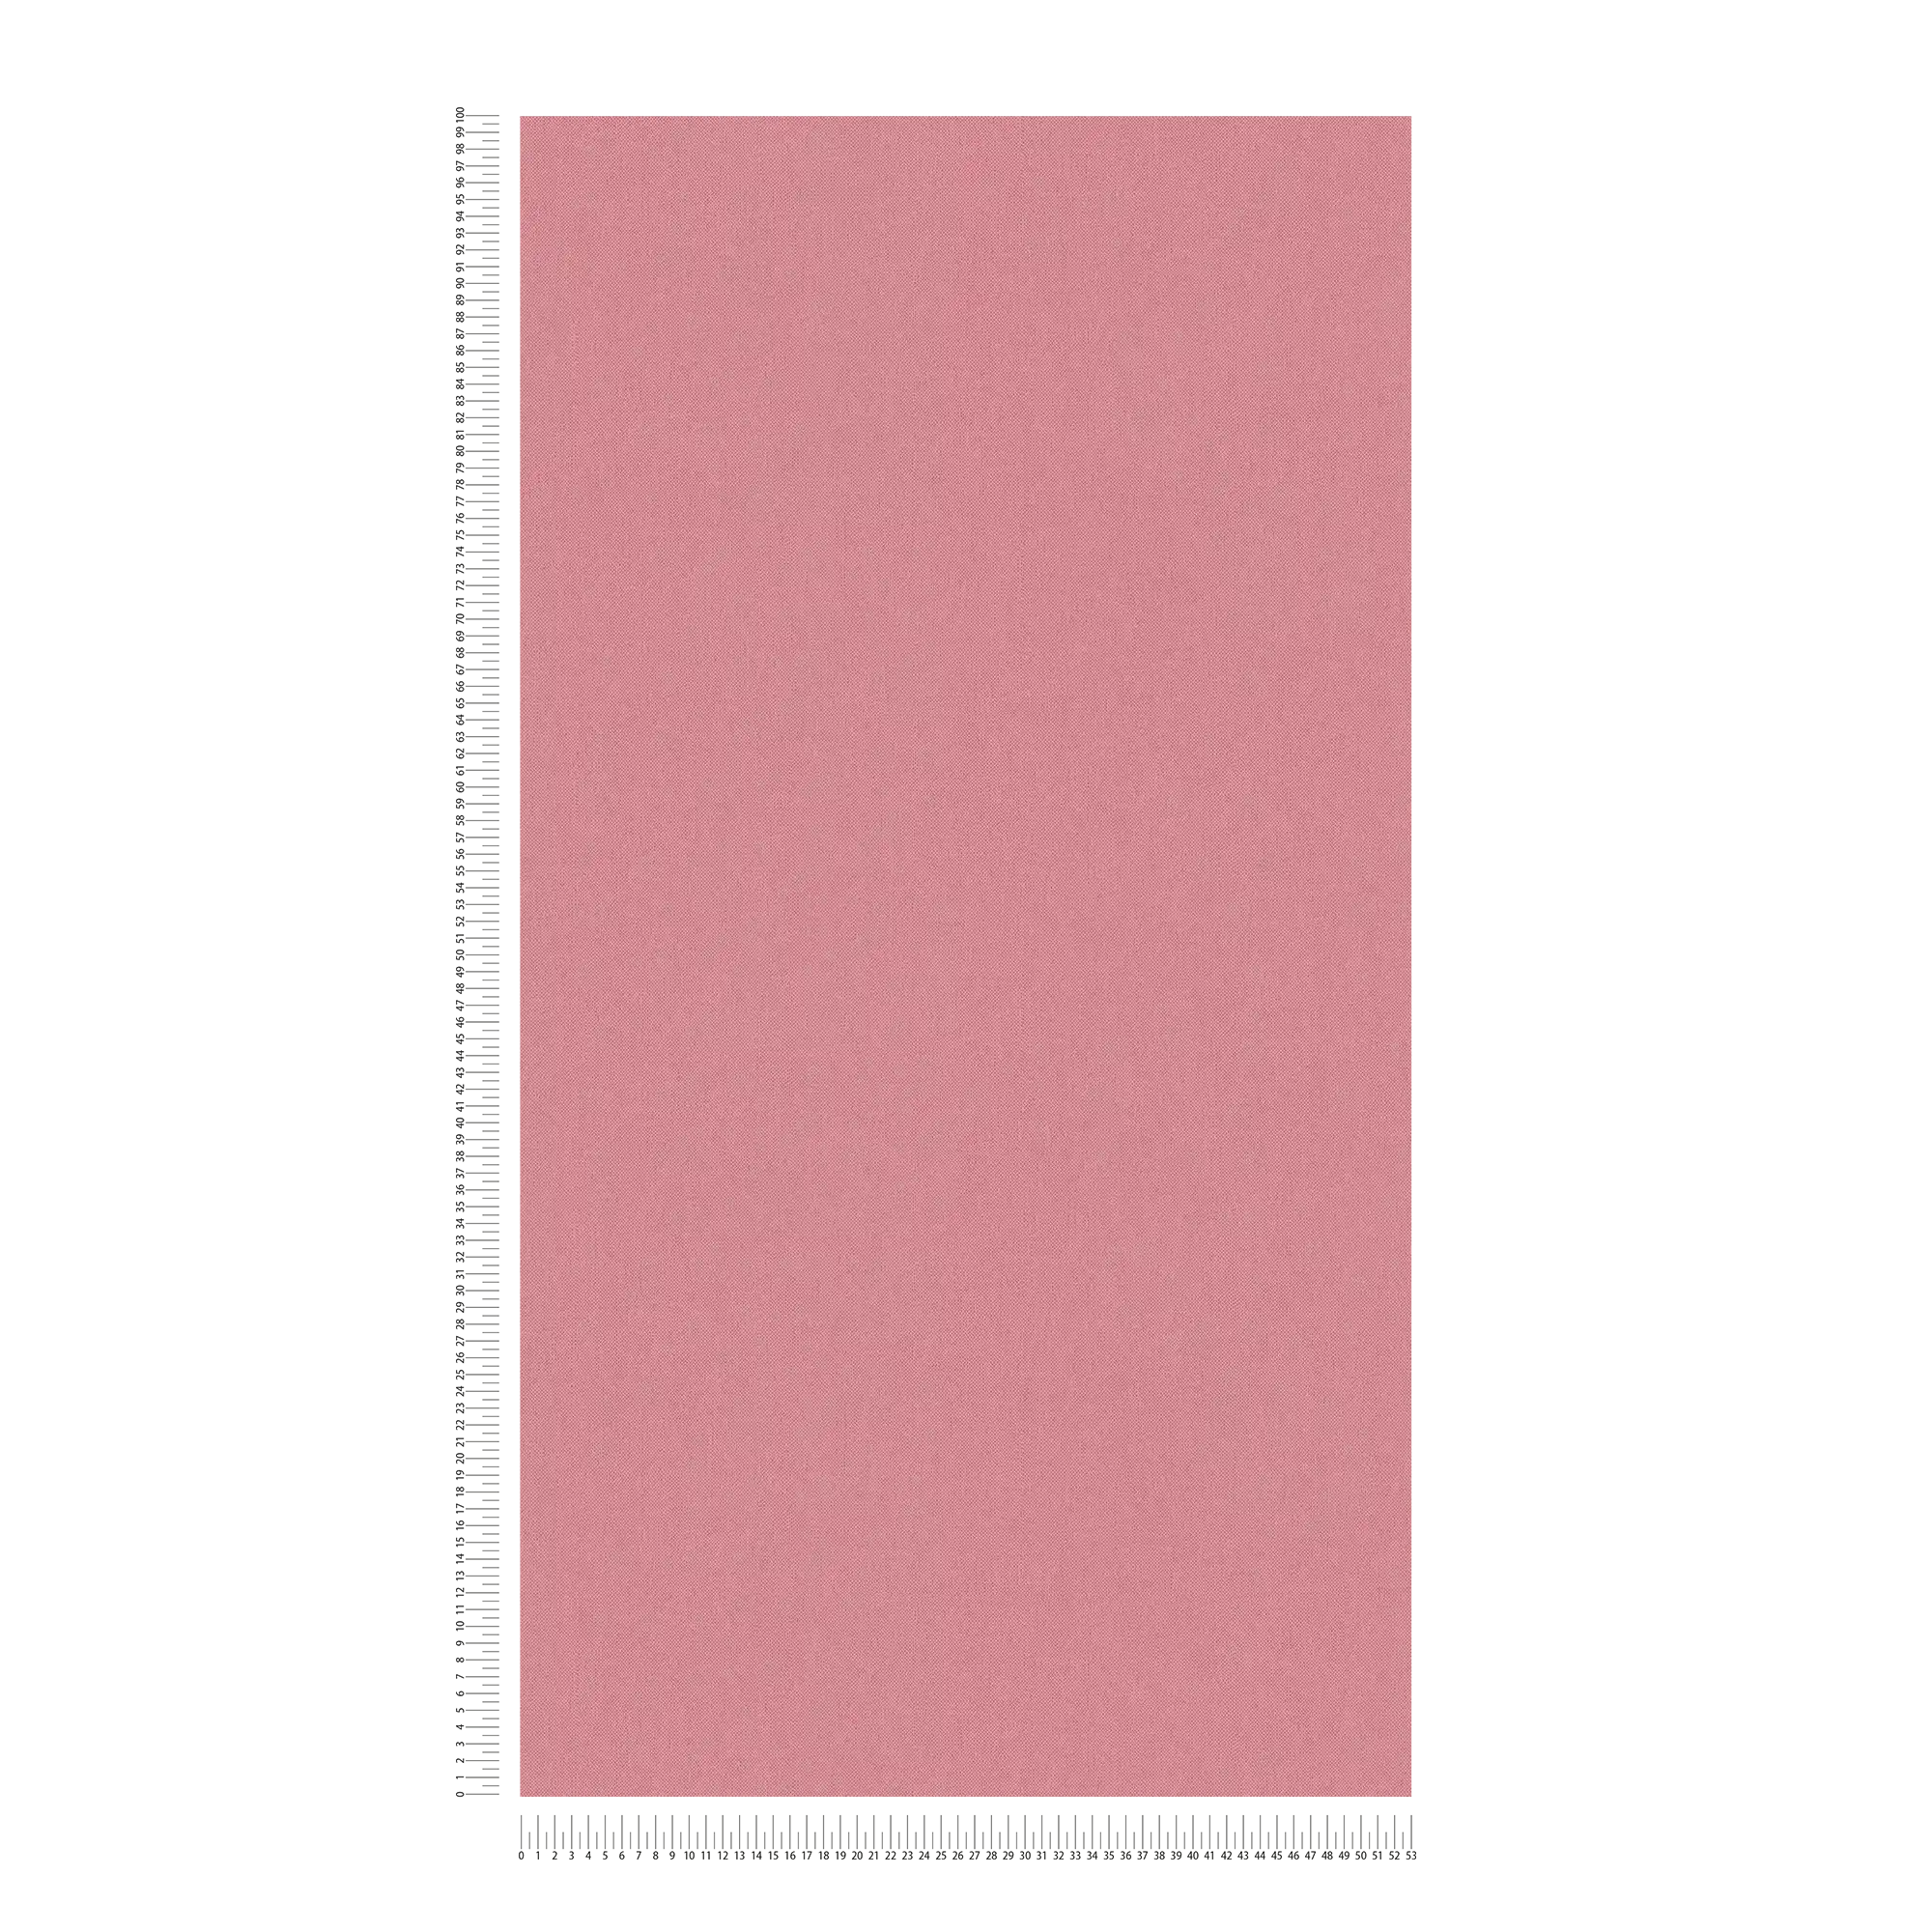             Carta da parati rosa antico uni, superficie opaca e struttura tessile - rosa
        